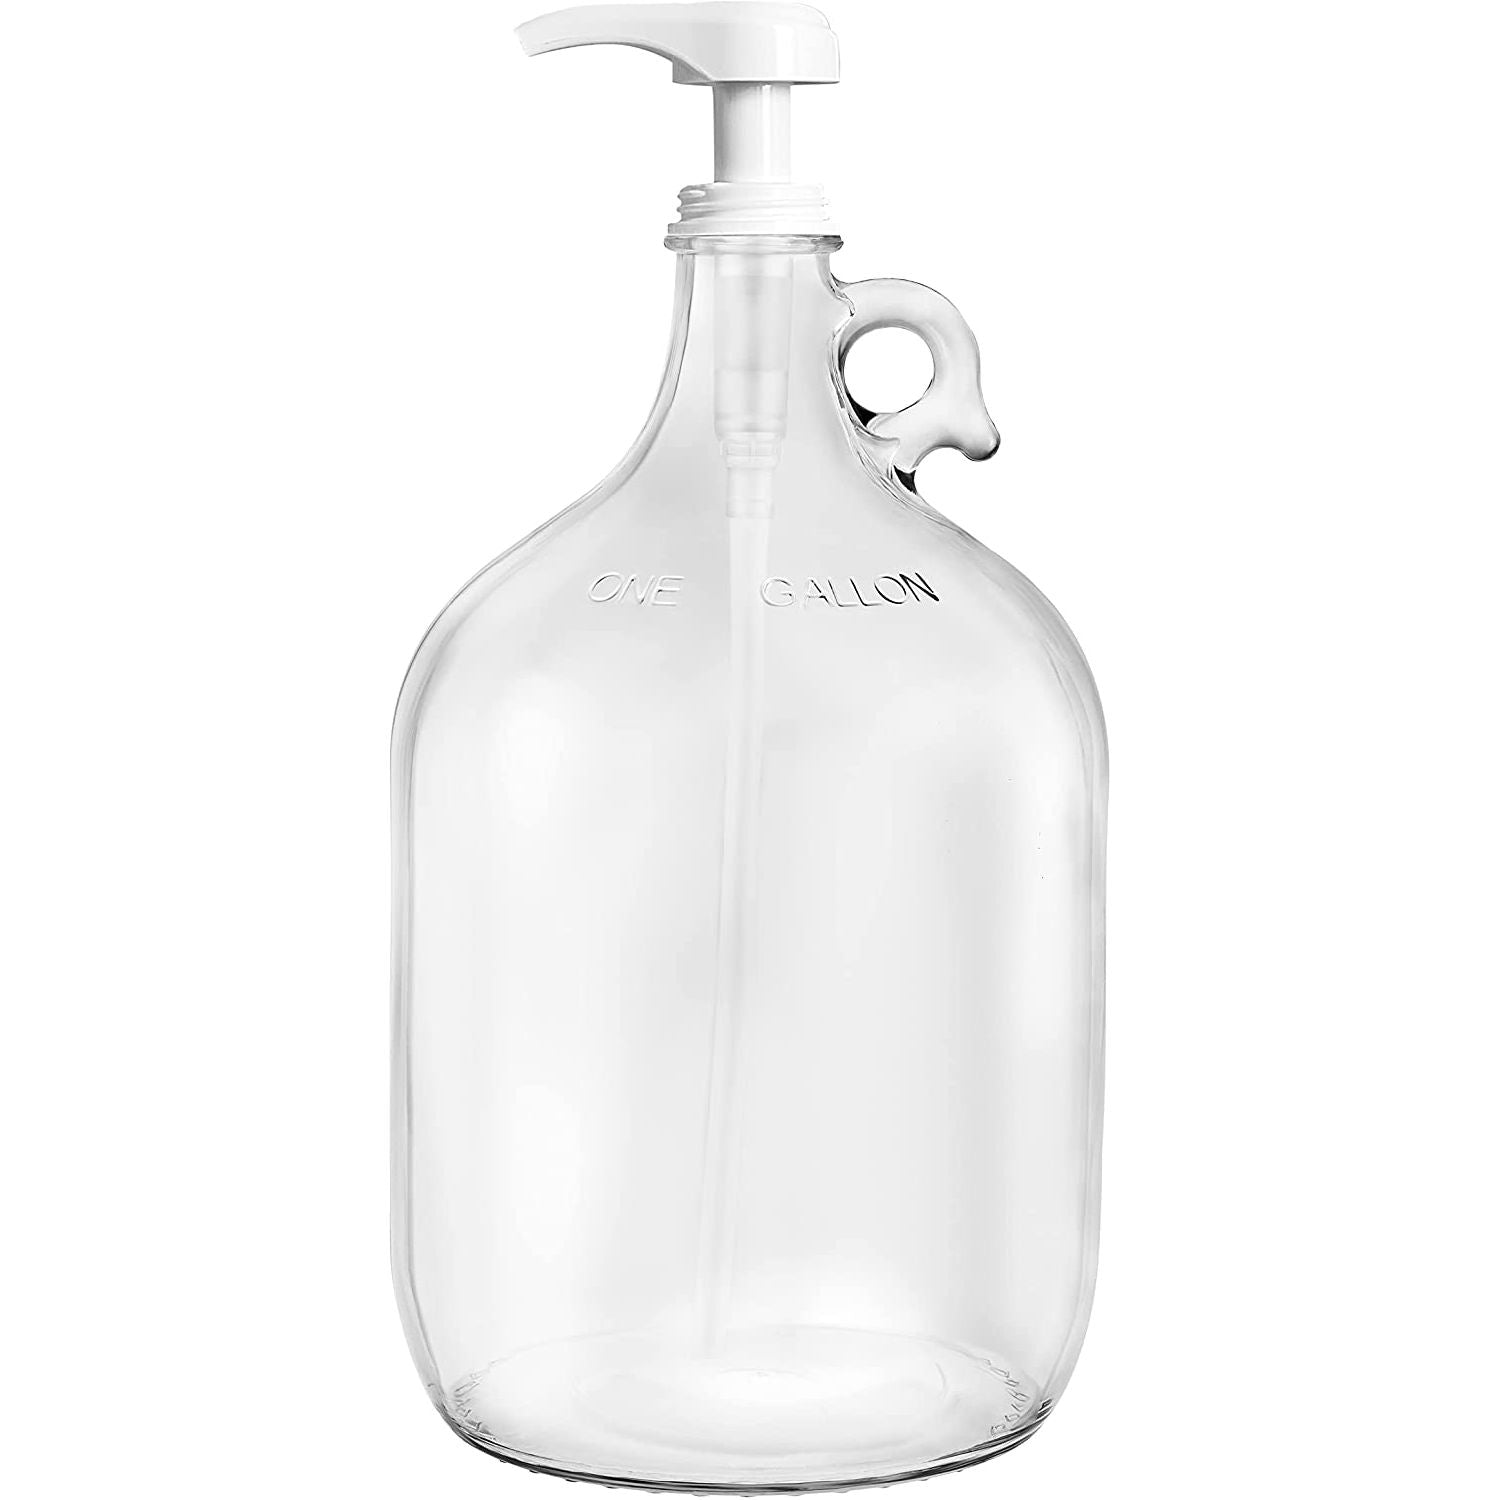 Pump Dispenser for 1 Gallon Bottle - Community Attire